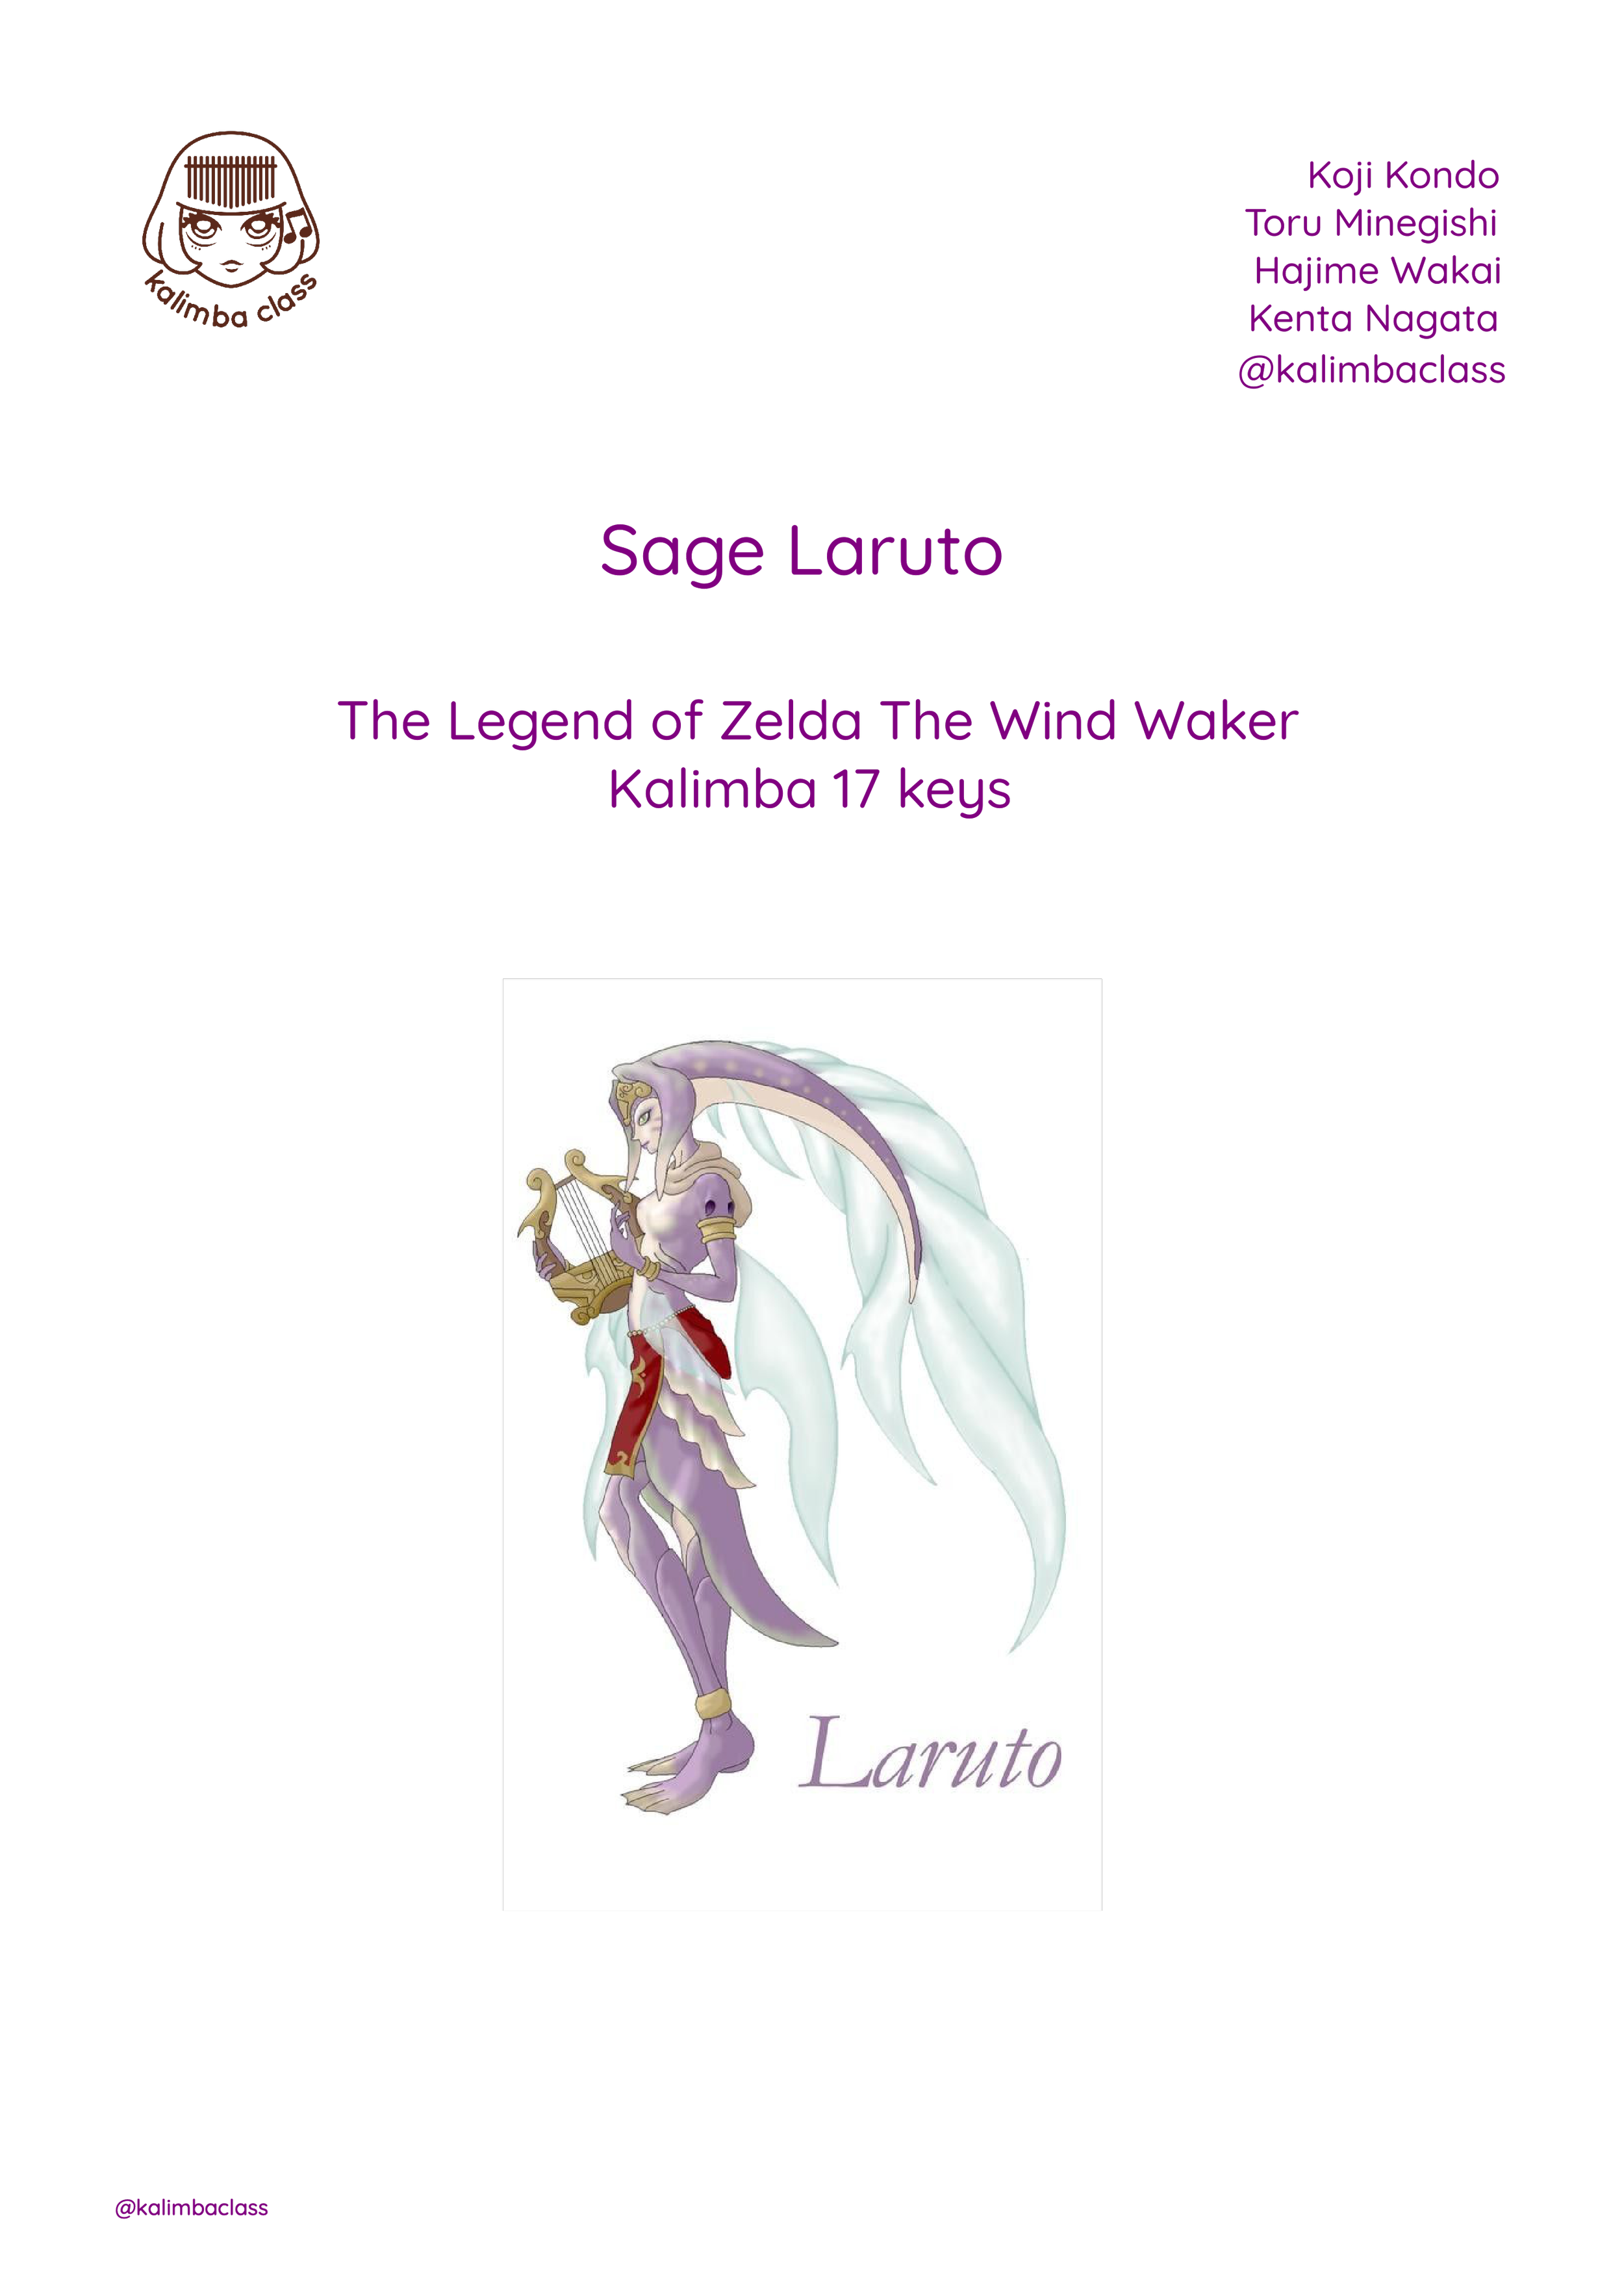 Sage Laruto, The Legend of Zelda The Wind Waker